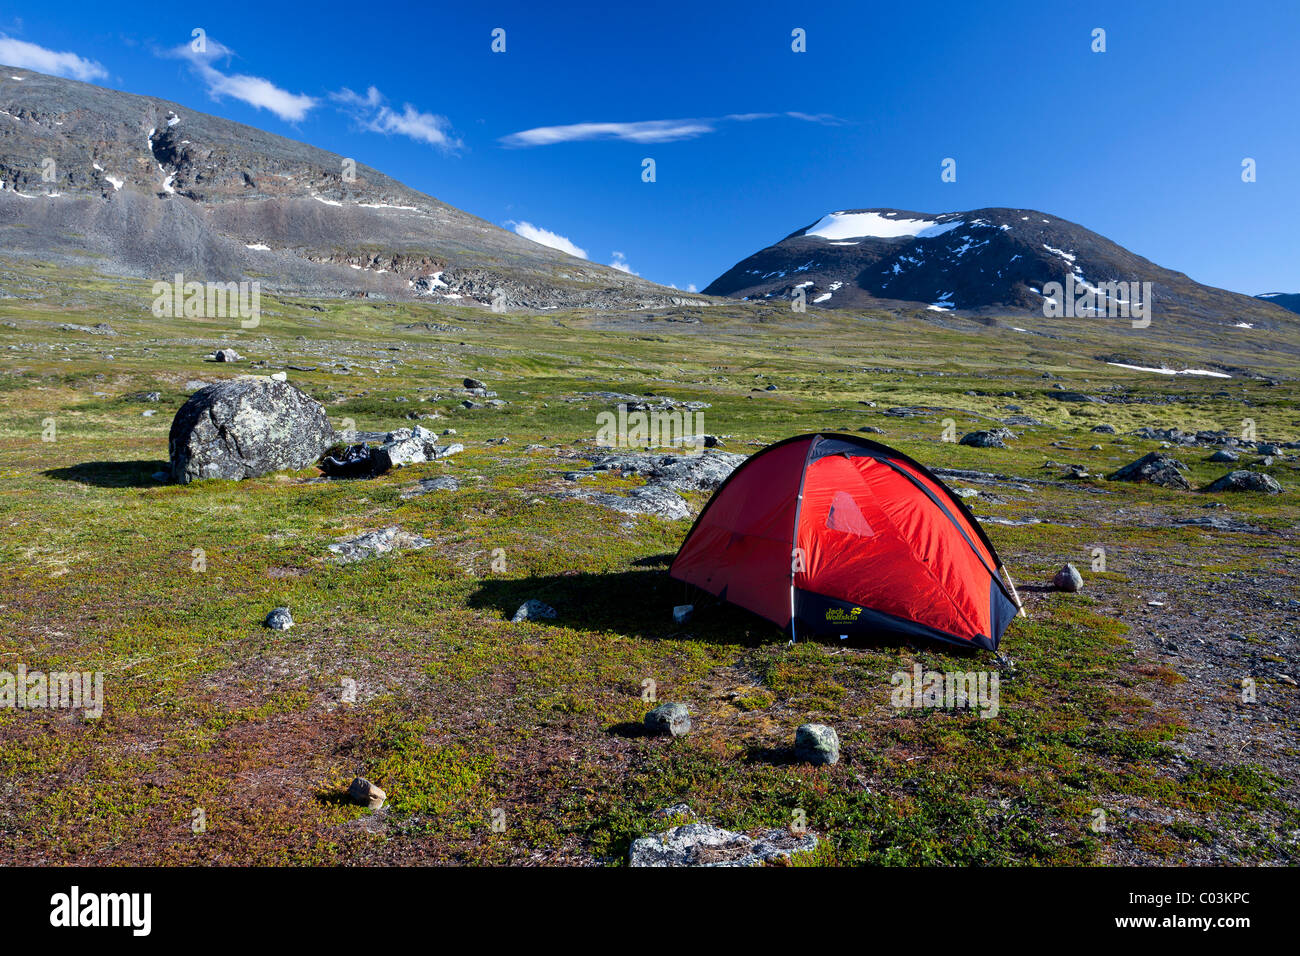 Tenda Rossa nel Fjaell montagne, Kungsleden del re Trail, Lapponia, Svezia, Europa Foto Stock